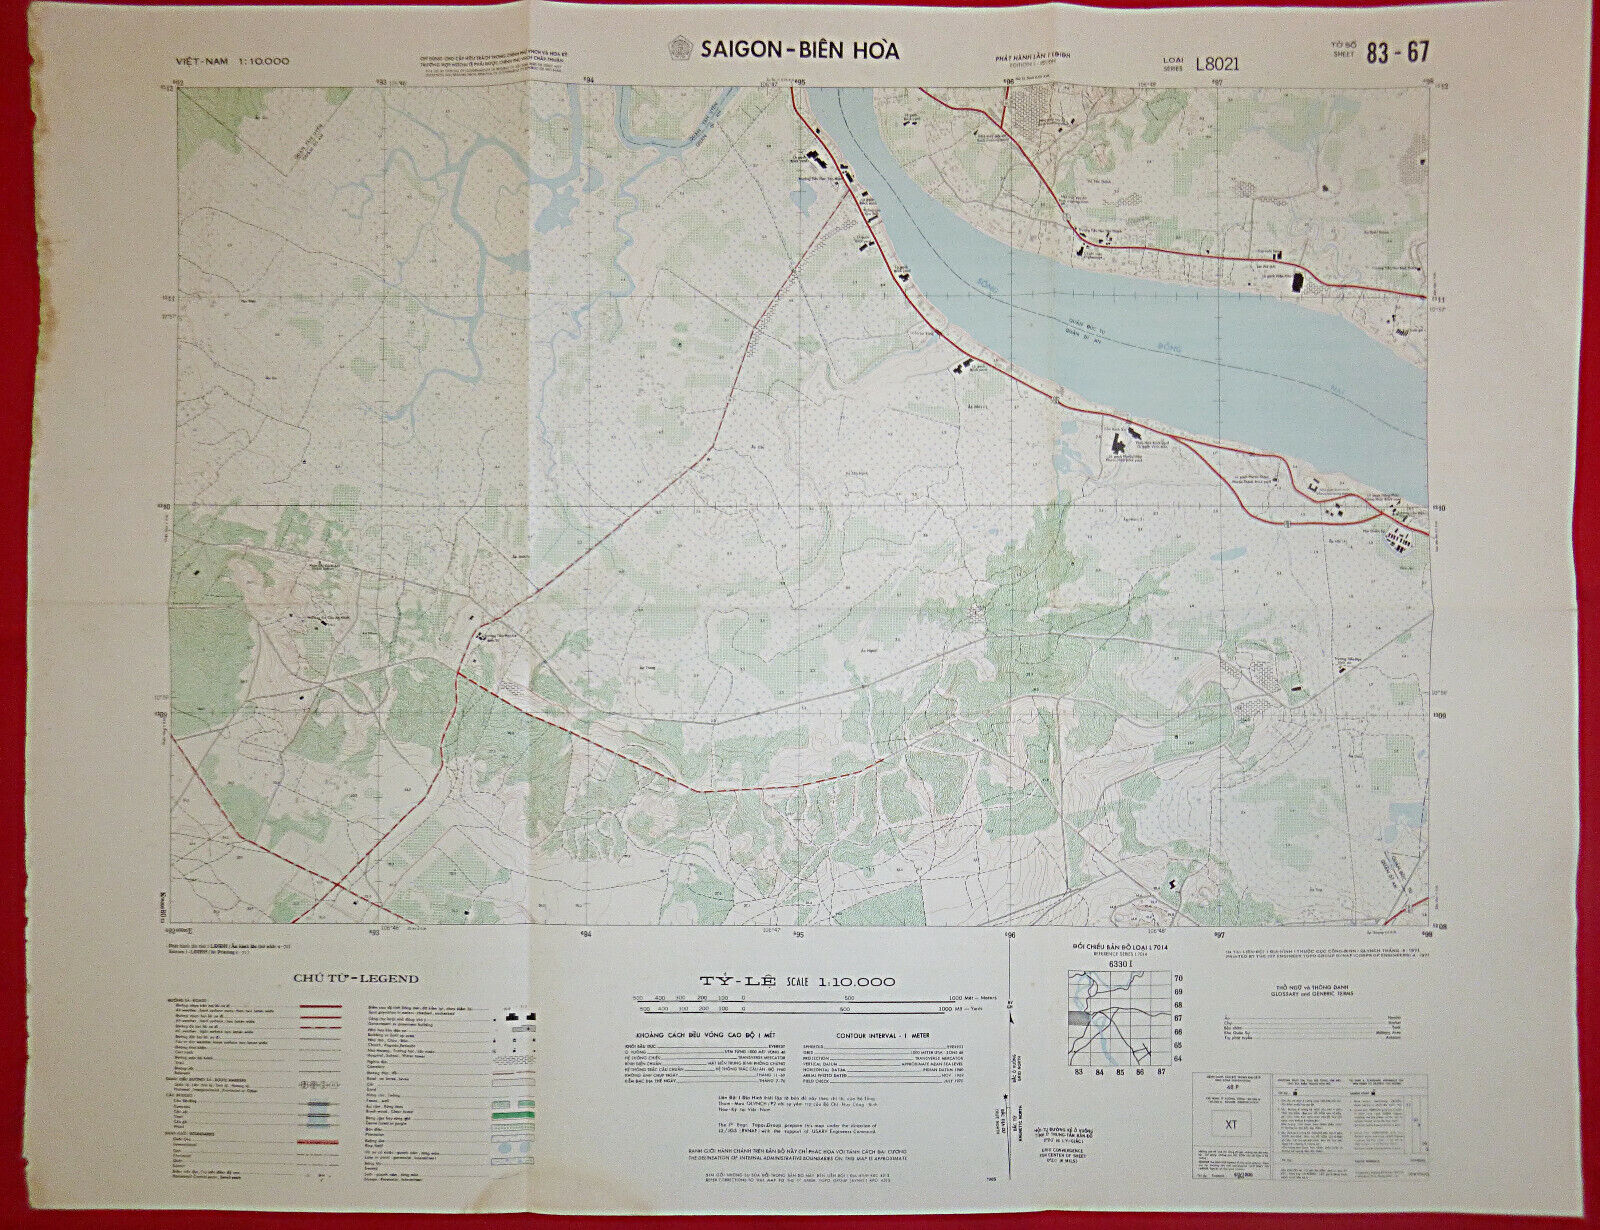 MAP - 83-67 - SAIGON - BIEN HOA - DONG NAI RIVER - 1971 ORPHANAGE - Vietnam War